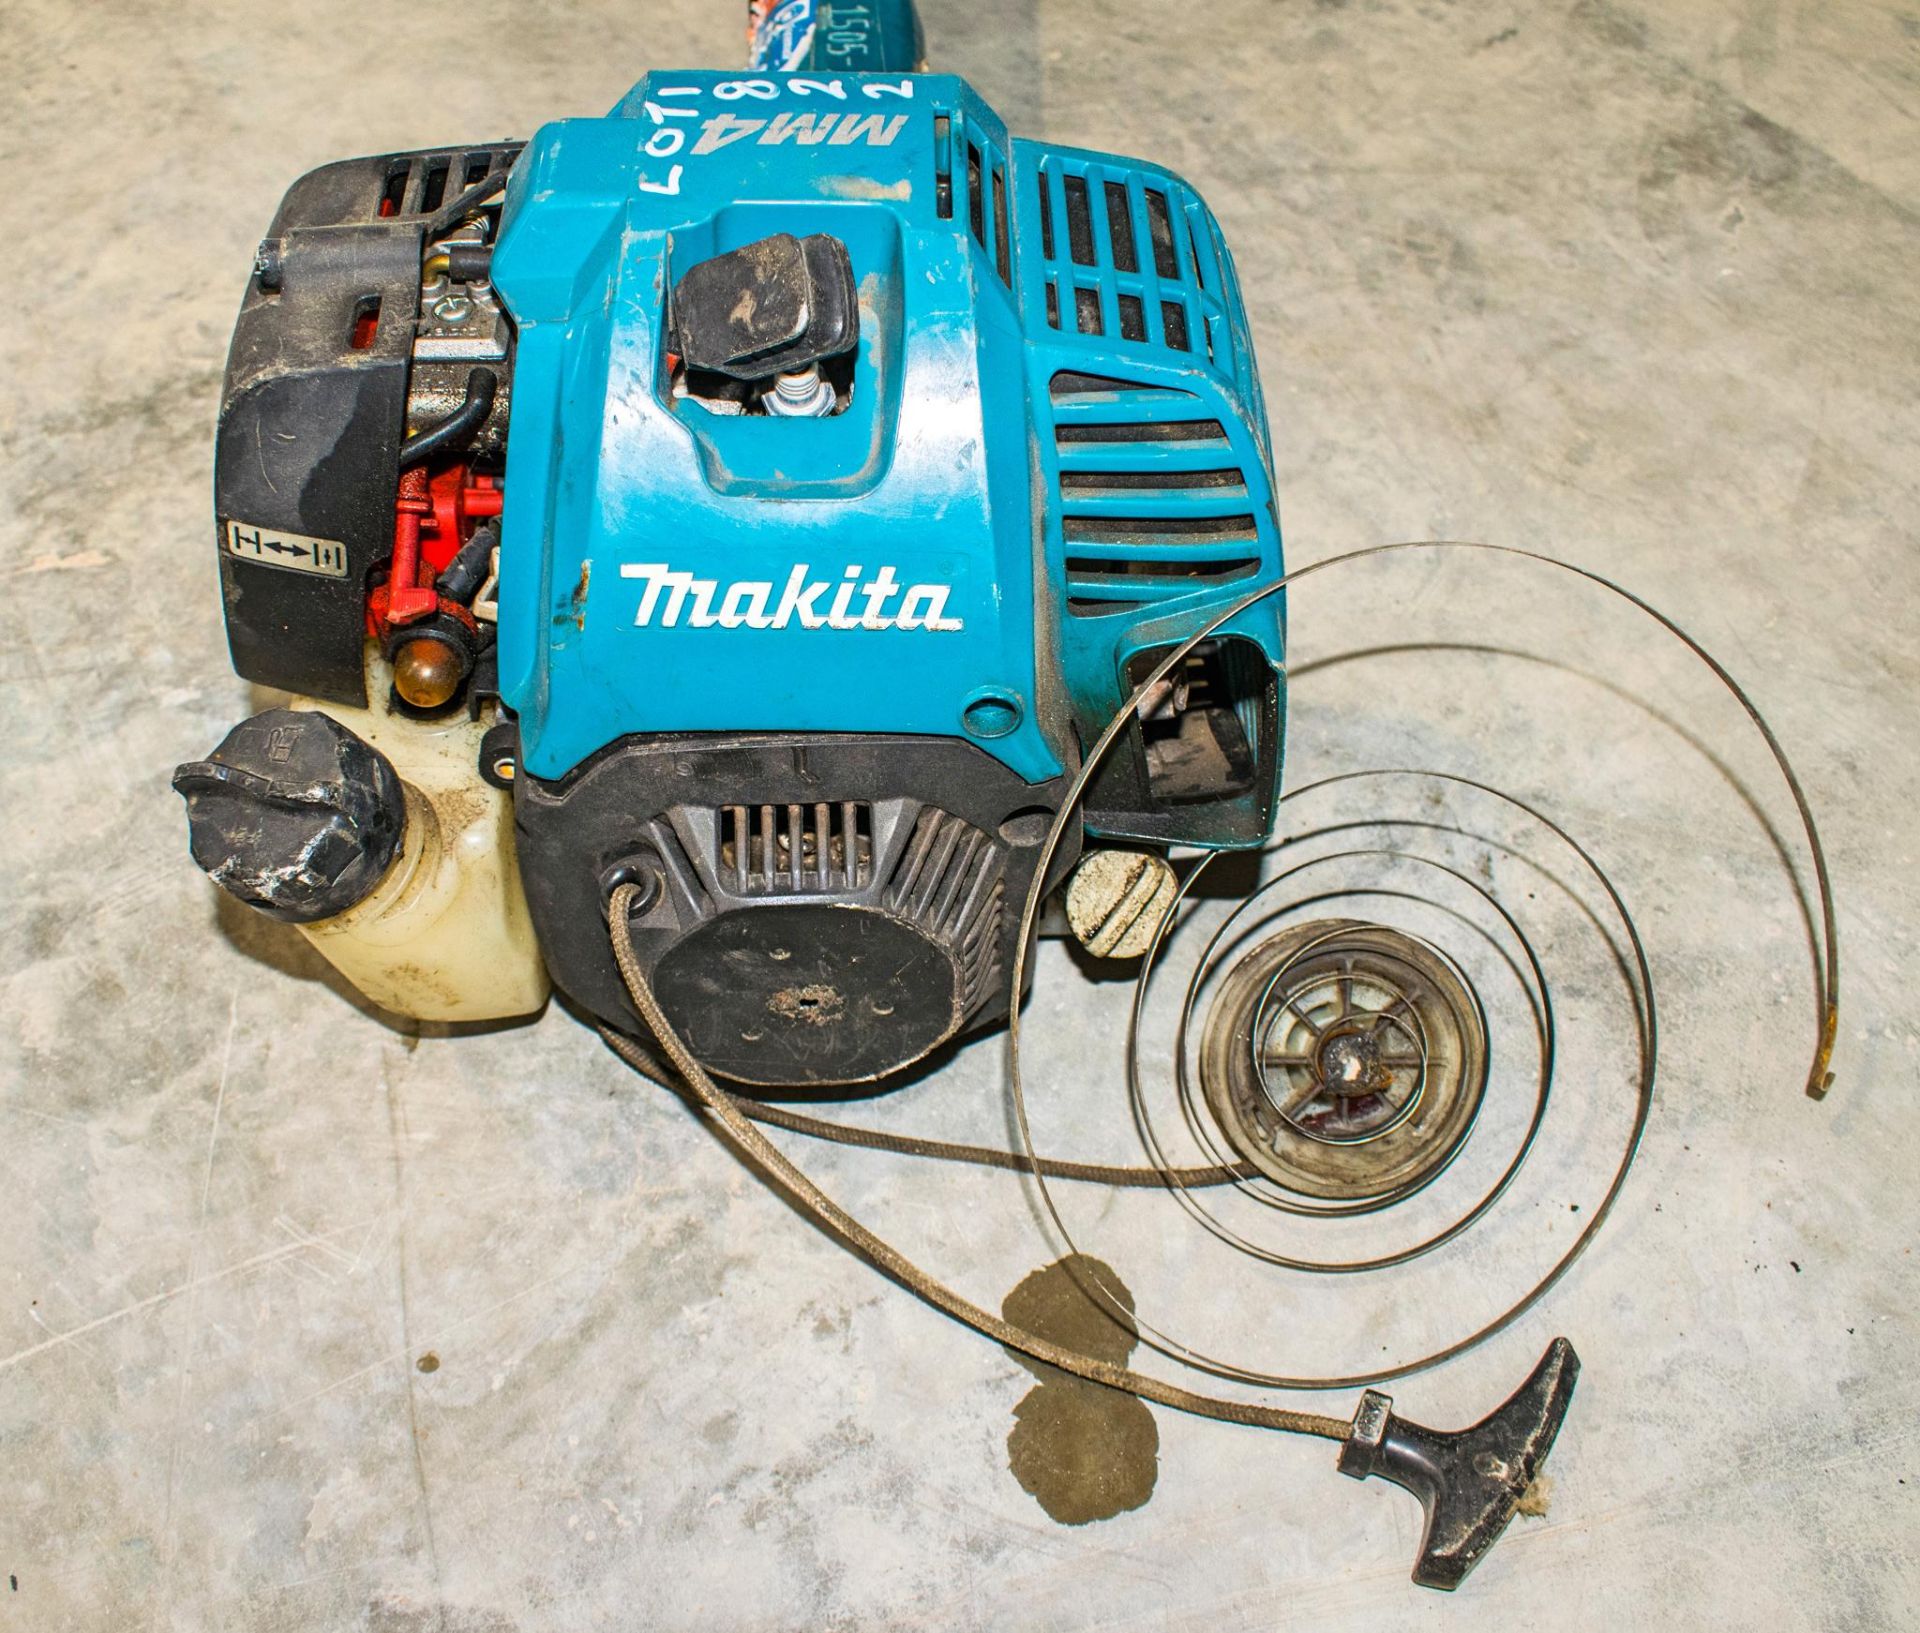 Makita EM4351UH petrol driven strimmer ** Parts missing ** - Image 2 of 3